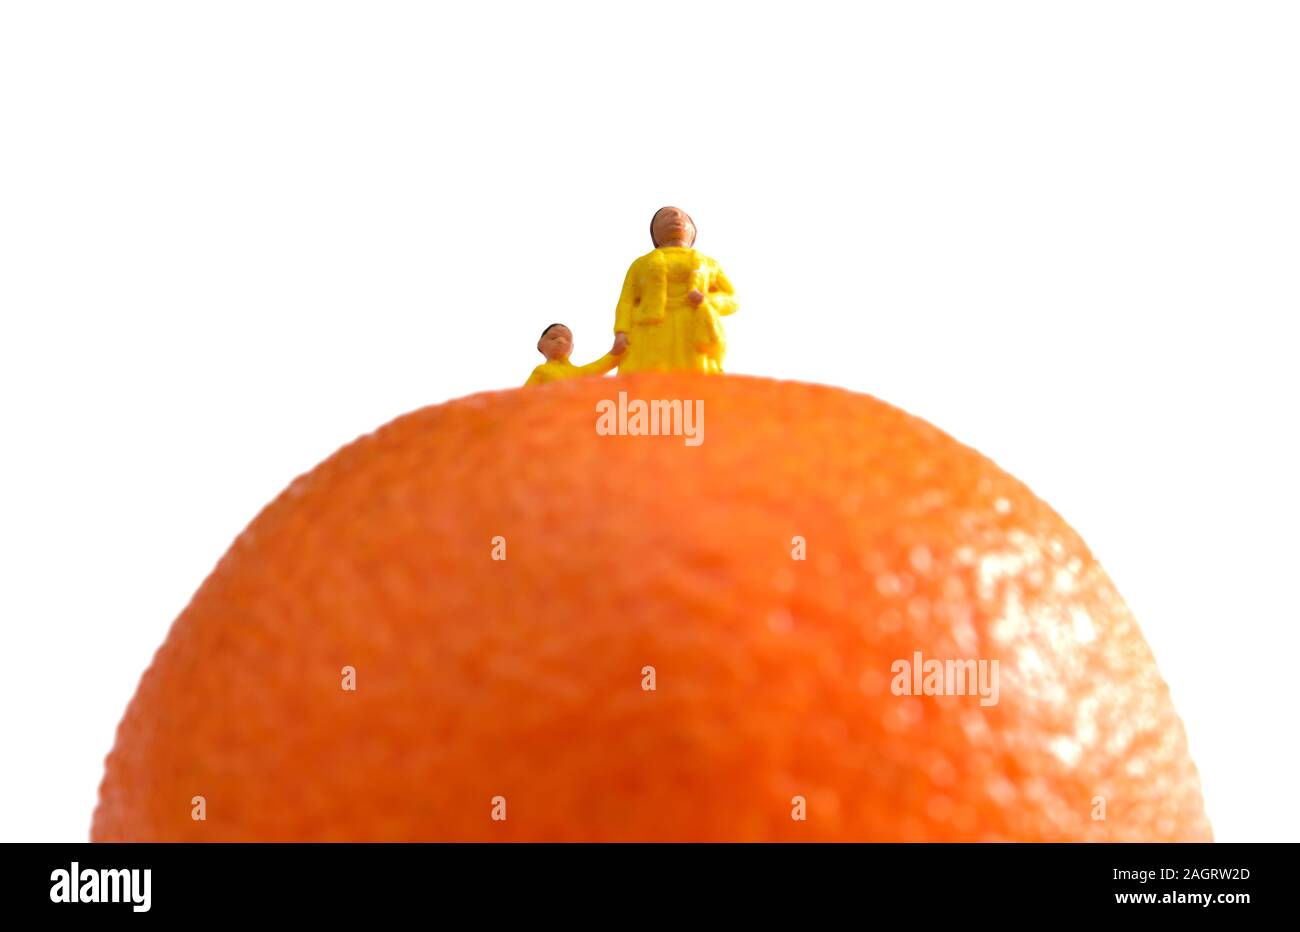 miniature figurines mum,mothers,kids,children,standing on an orange satsuma against a white background Stock Photo